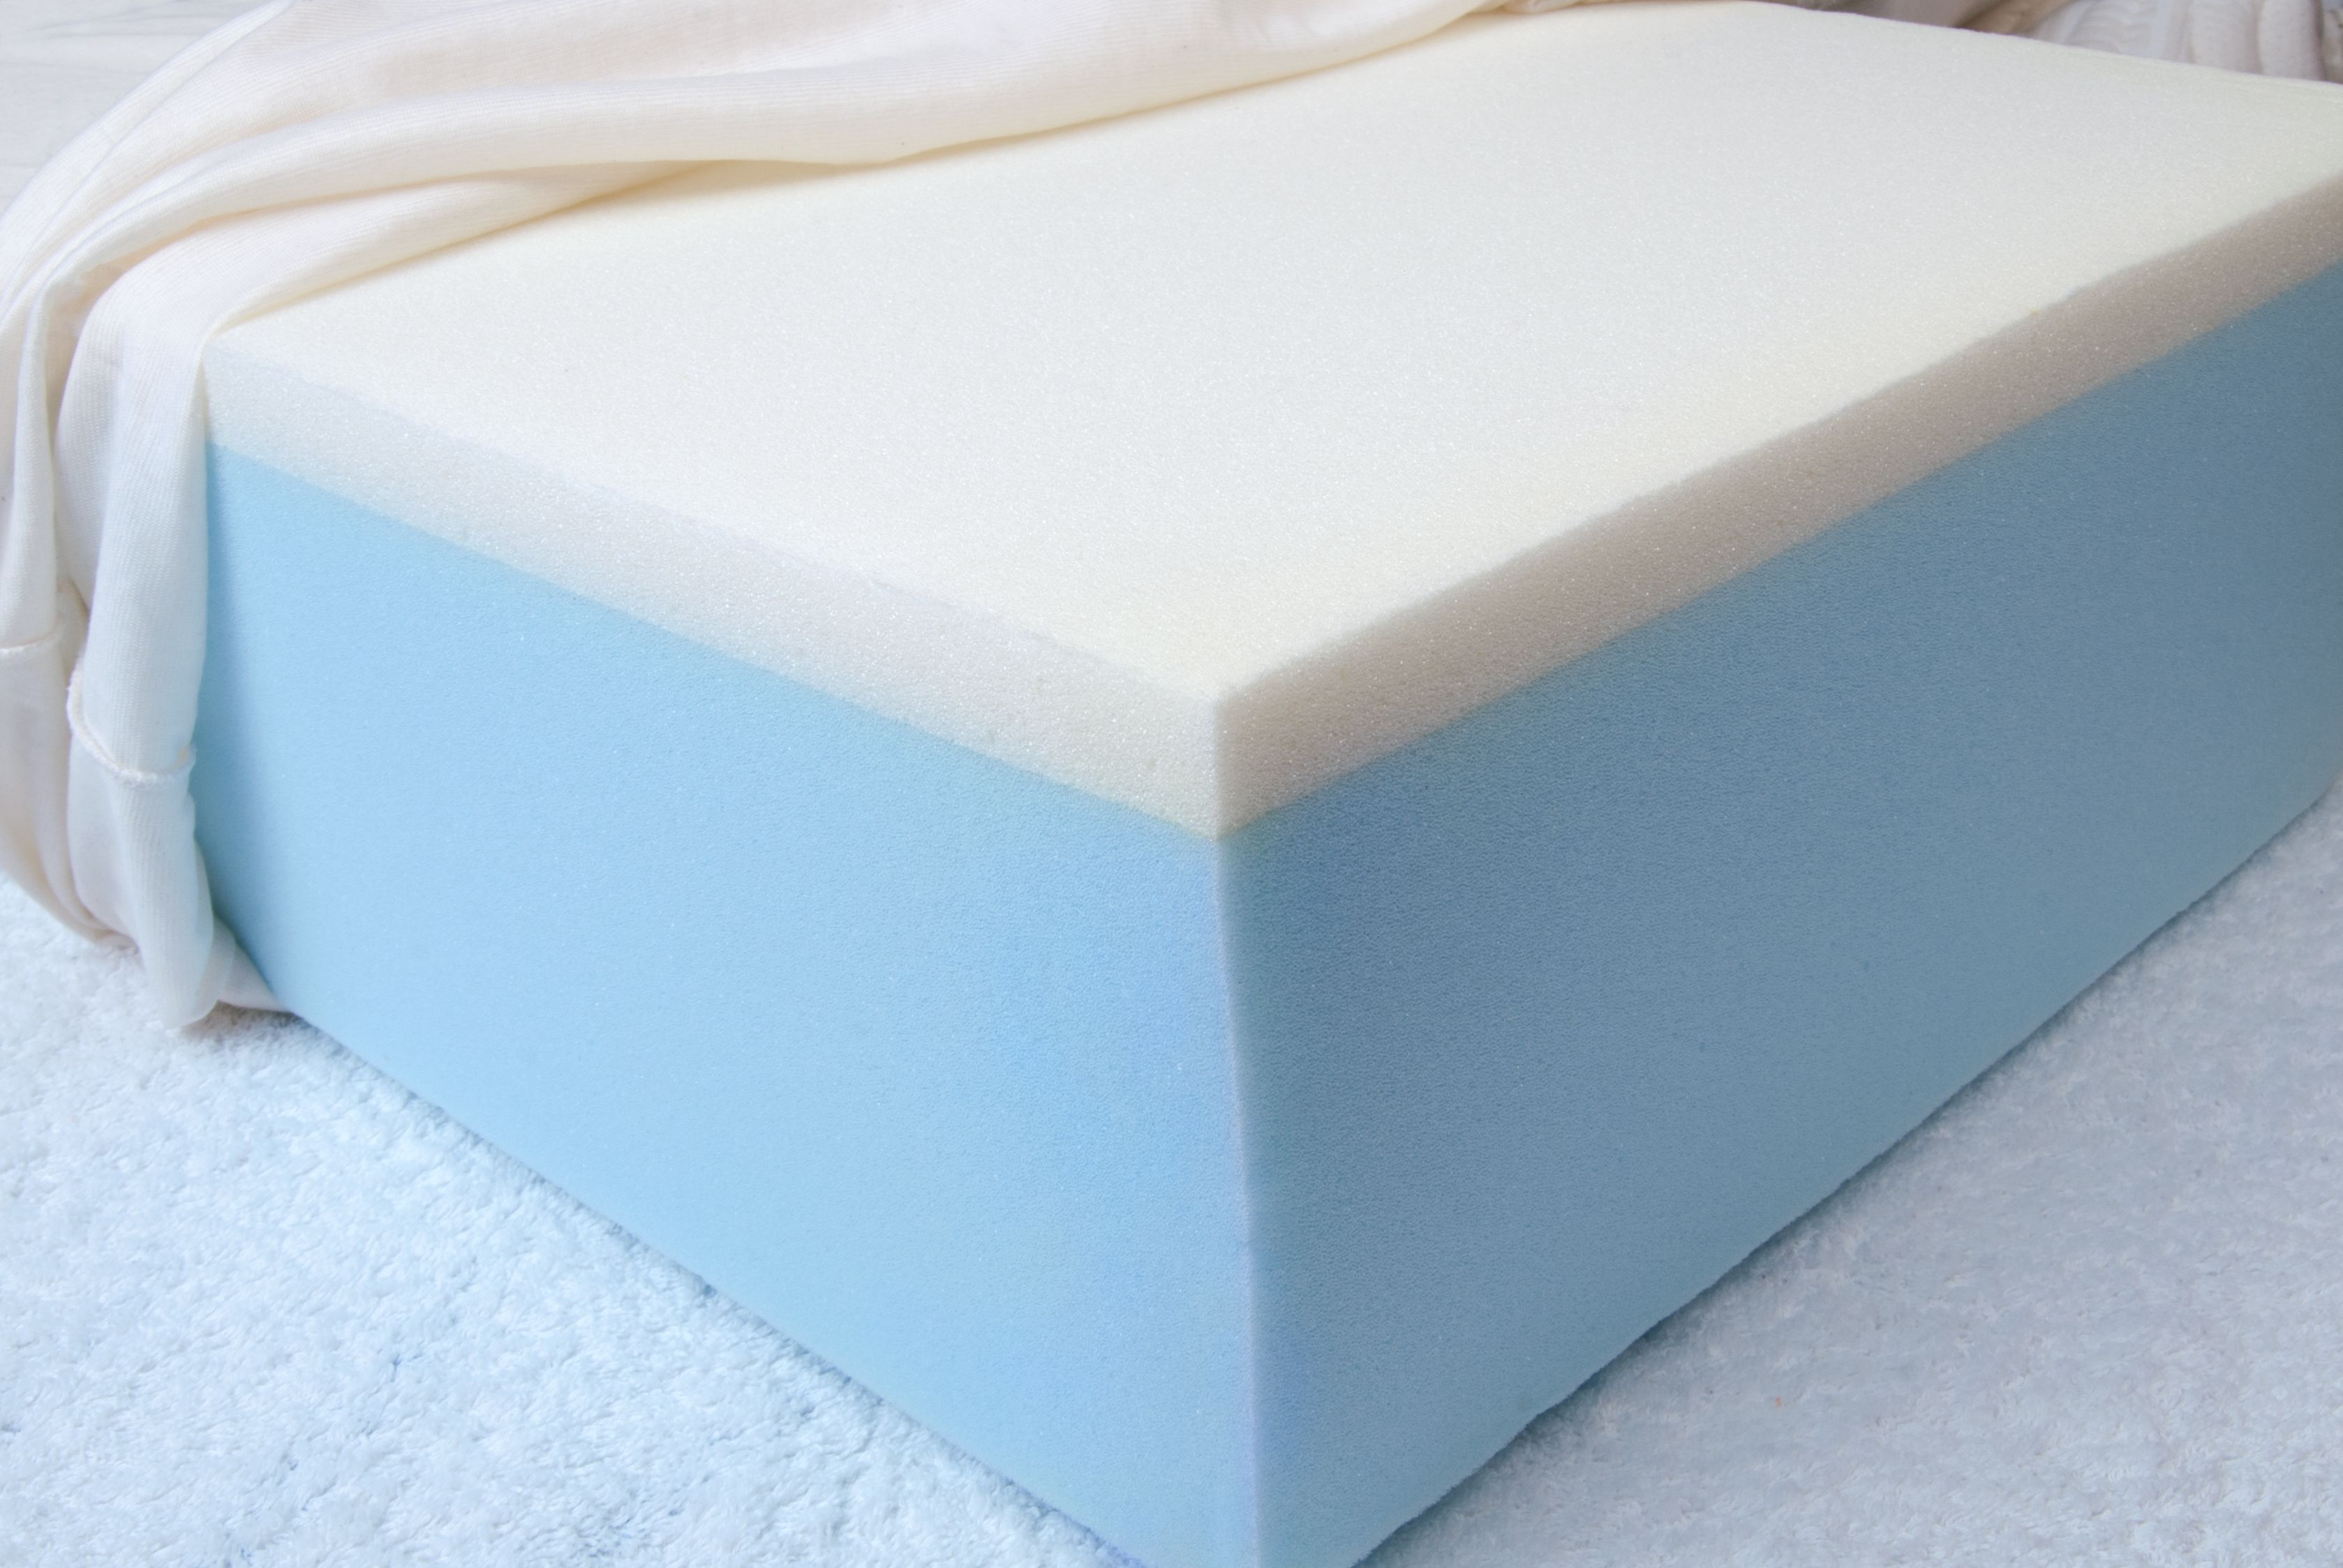 mattress foam wash pad egg crate pain pillow lower sponge neck memory firmness clean ild jowat lamination rating novosbed types